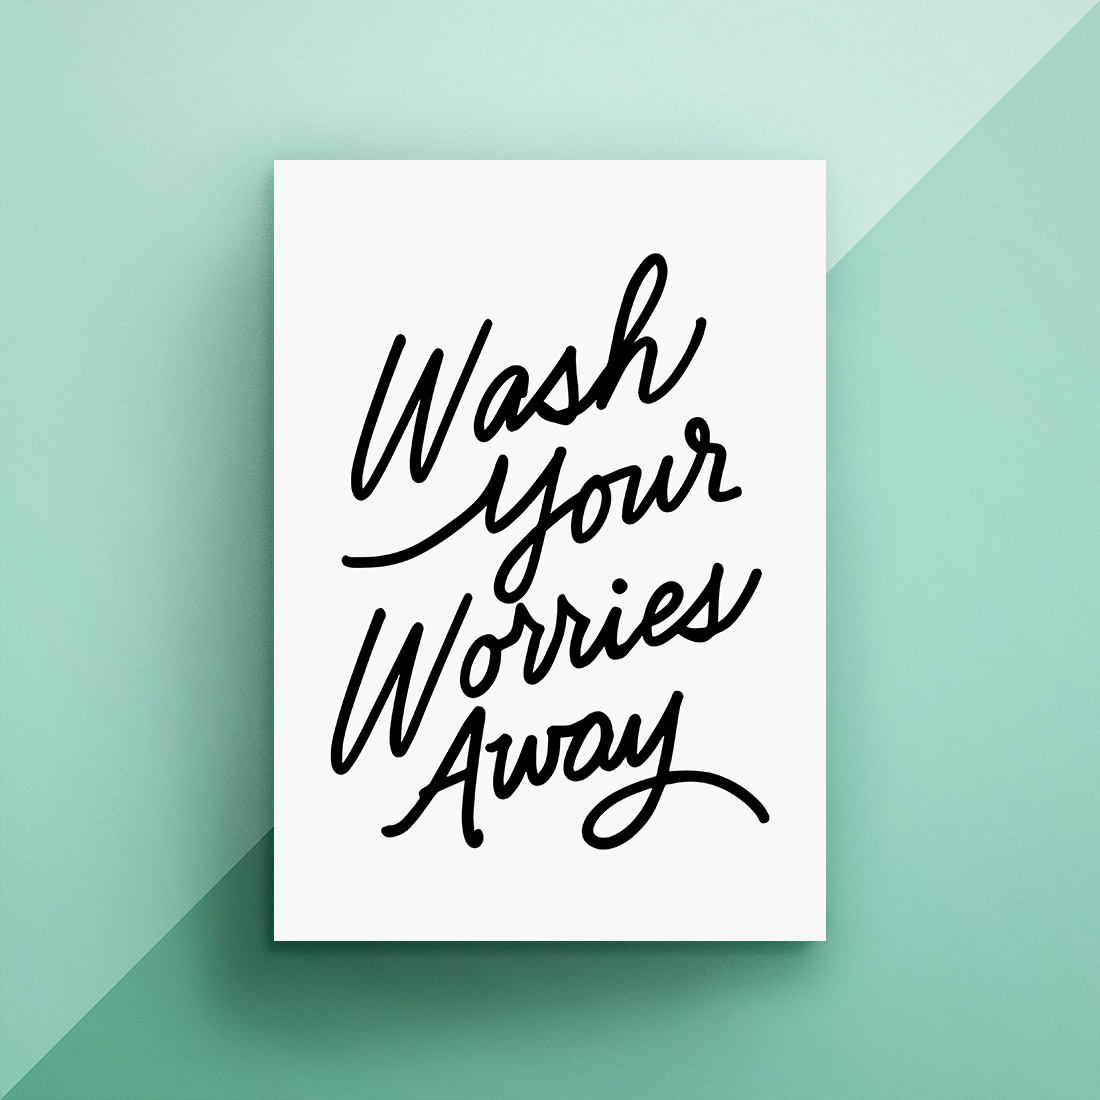 Wash Your Worries Away • Little Gold Pixel •  Download, print and hang today!

#freebie #freeprintable #bathroom #freeart #handlettered #handlettering